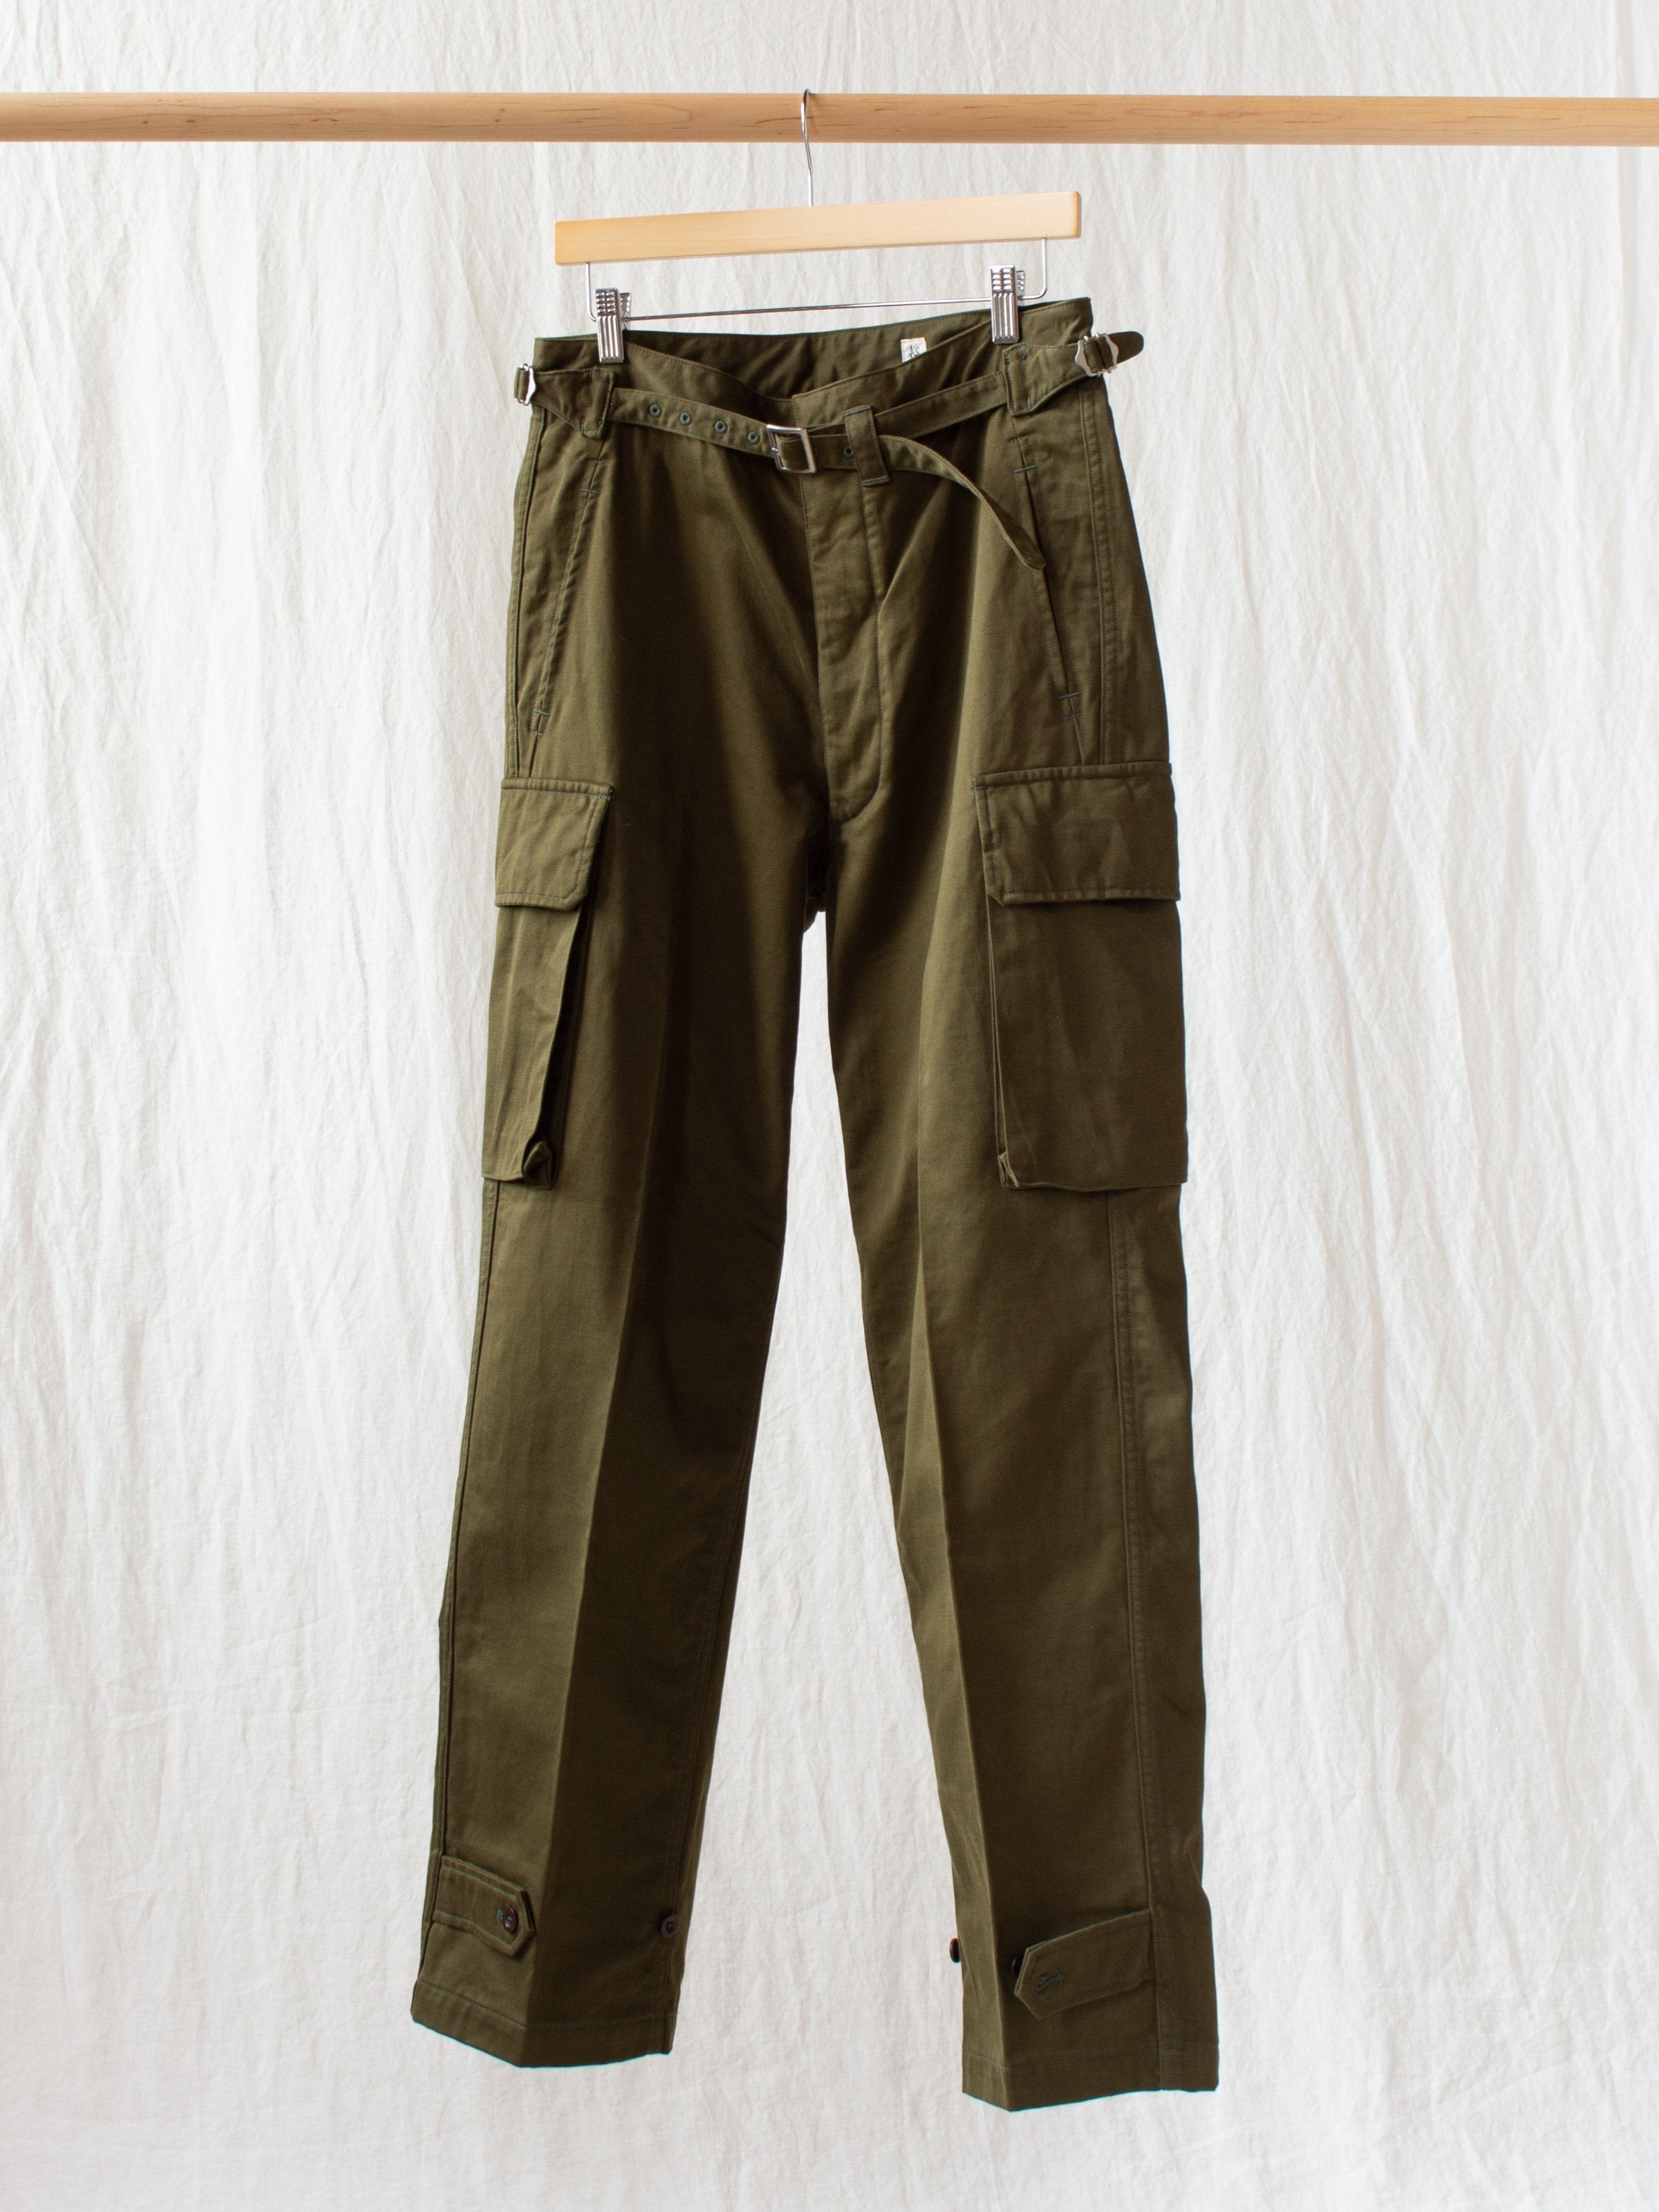 Namu Shop - Kaptain Sunshine Army Cargo Pants - Olive